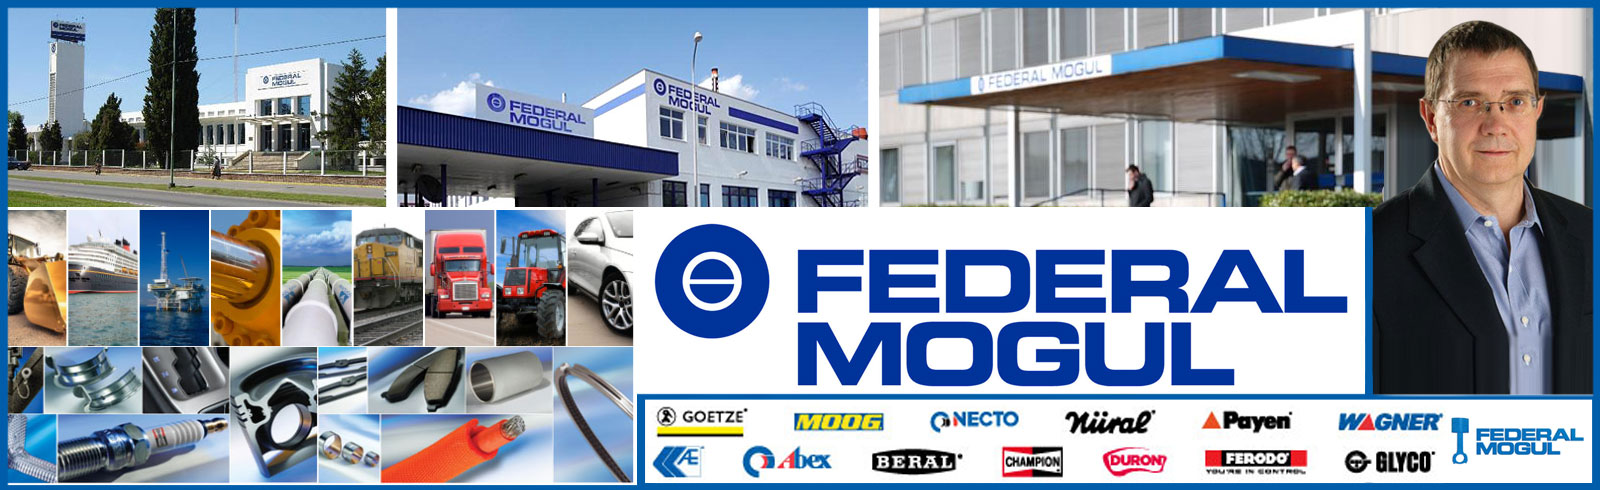 Federal Mogul TruckAutoPart 